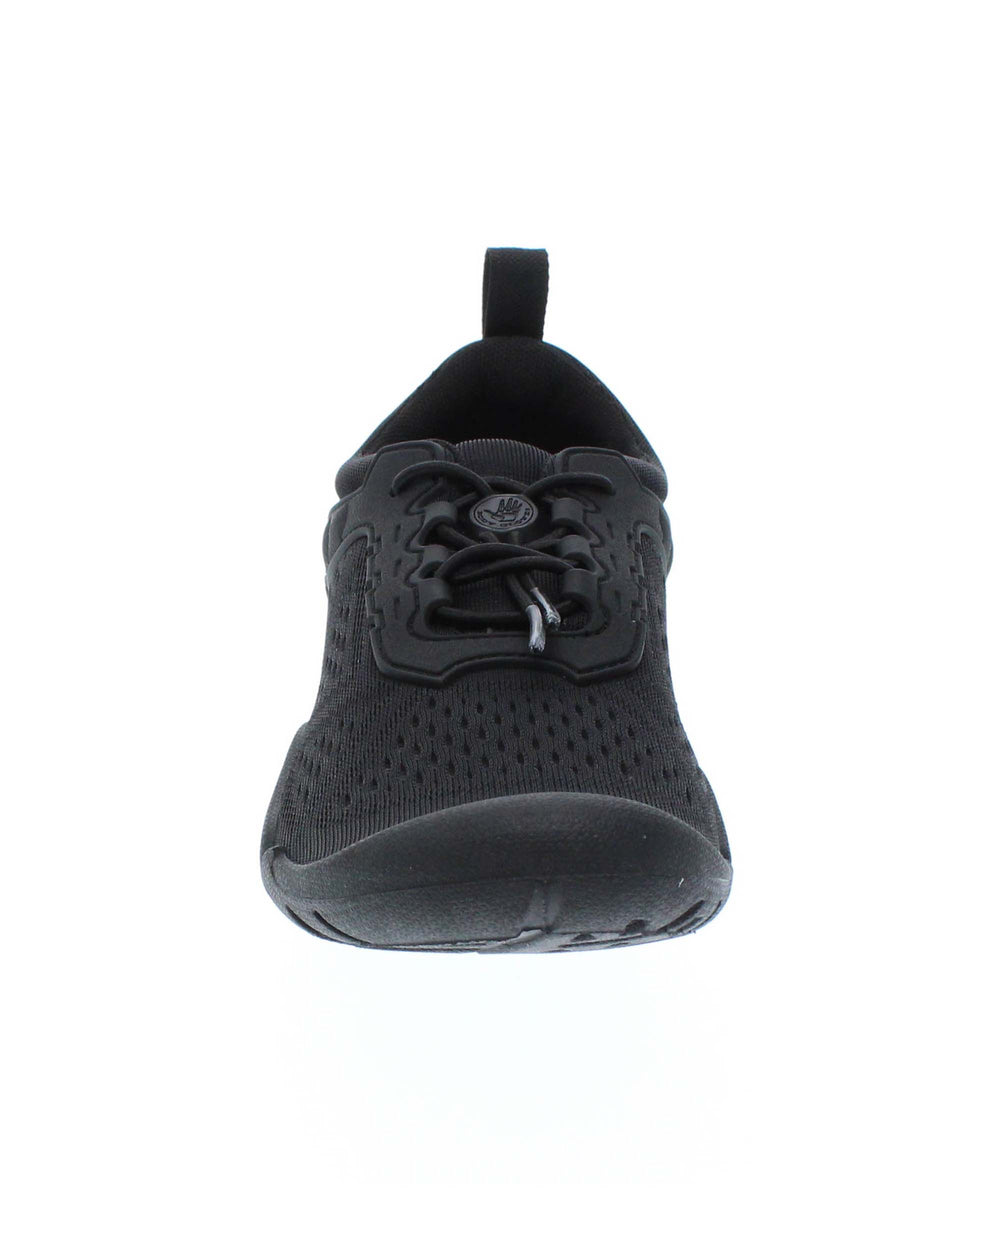 Women's Nautilus Water Shoes - Black - Body Glove